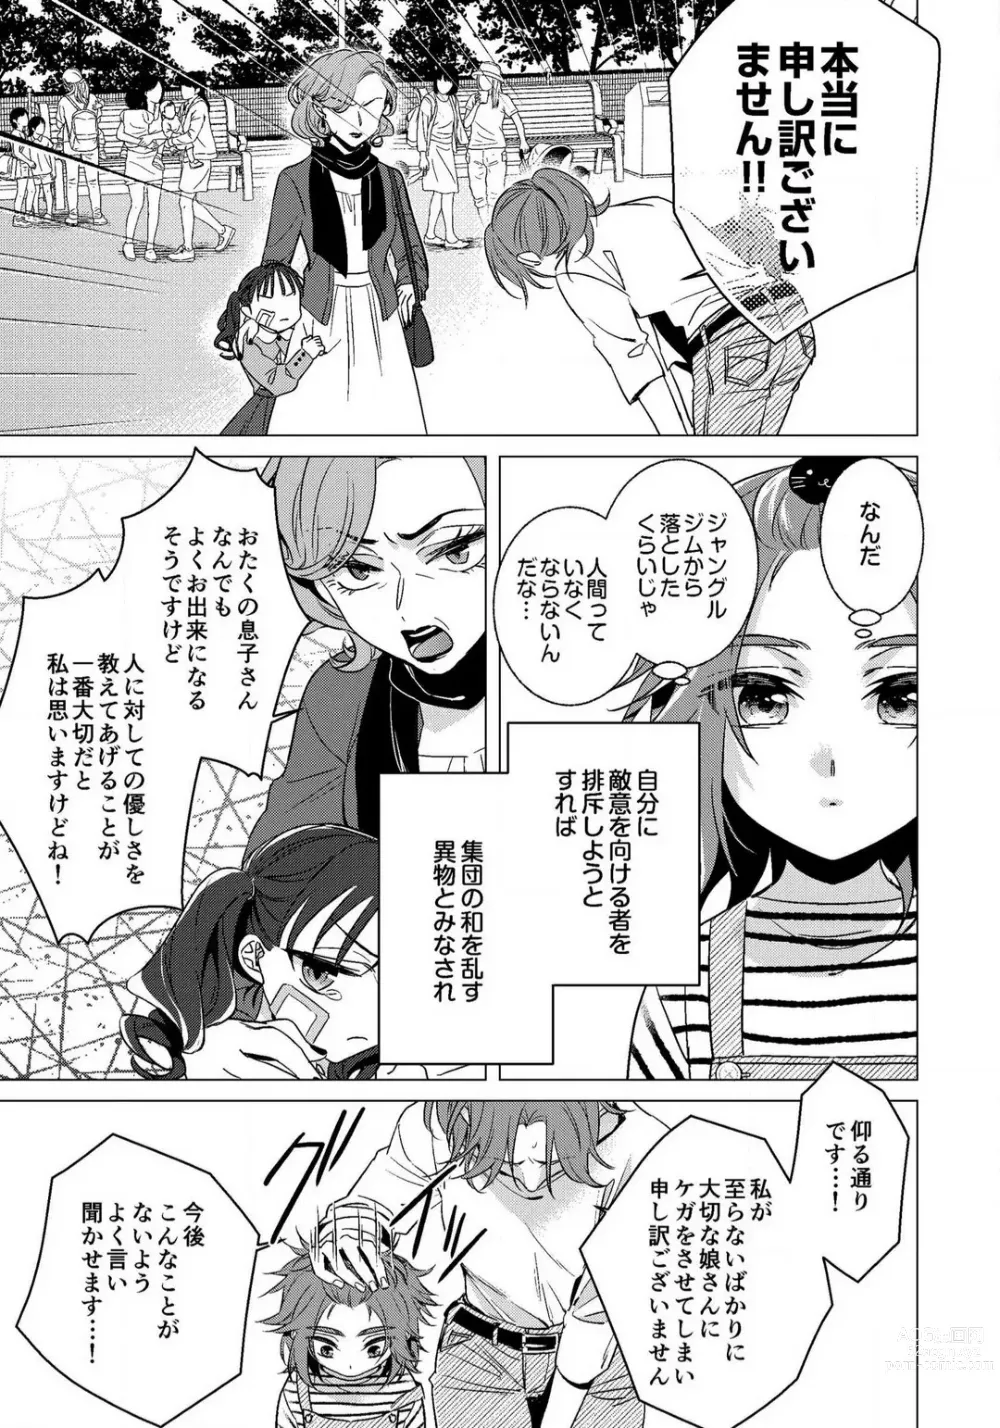 Page 7 of manga Ijimerare - Onna